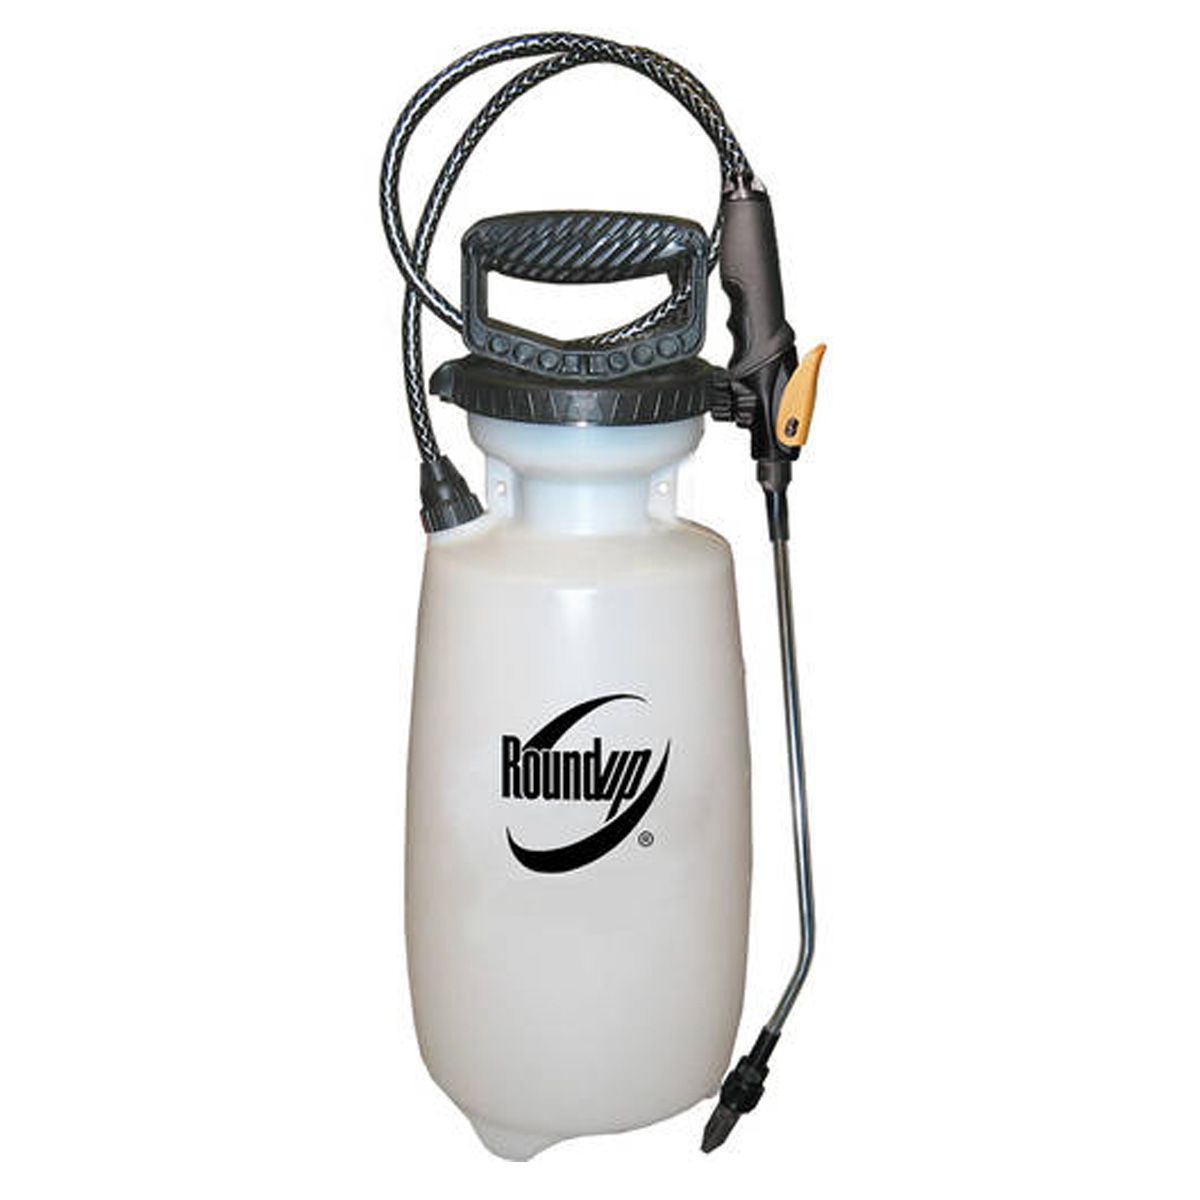 Roundup® Sprayer  - 1 Gallon